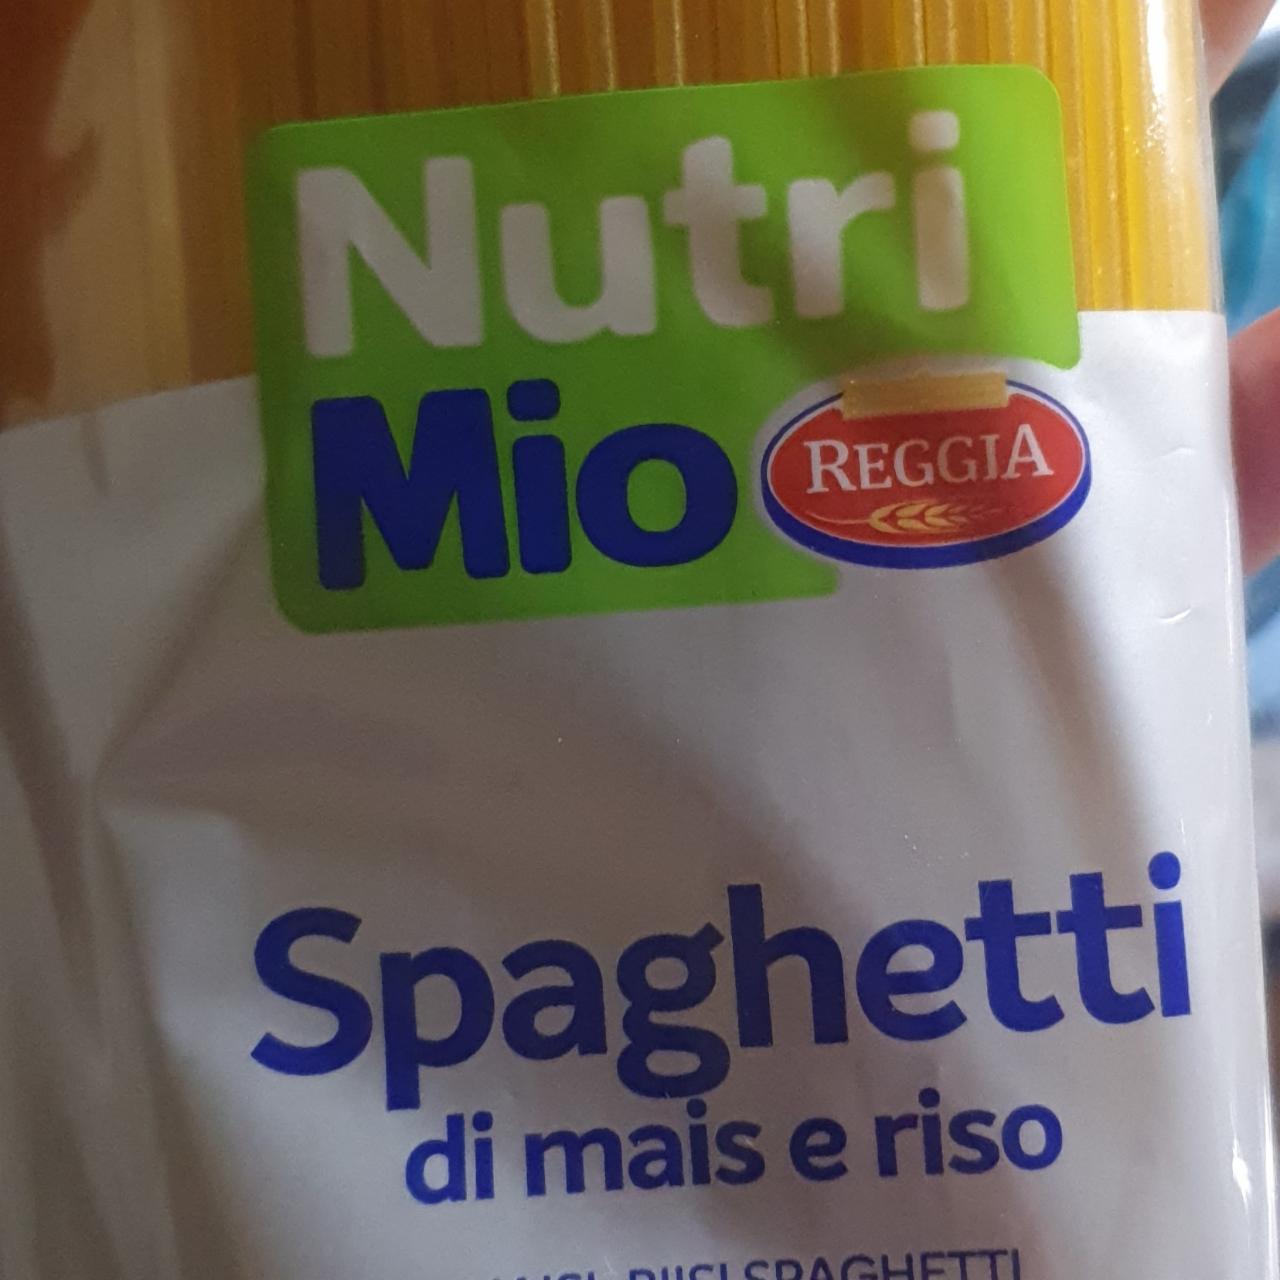 Фото - Макарони спагеті Spaghetti Nutri Mio Reggia